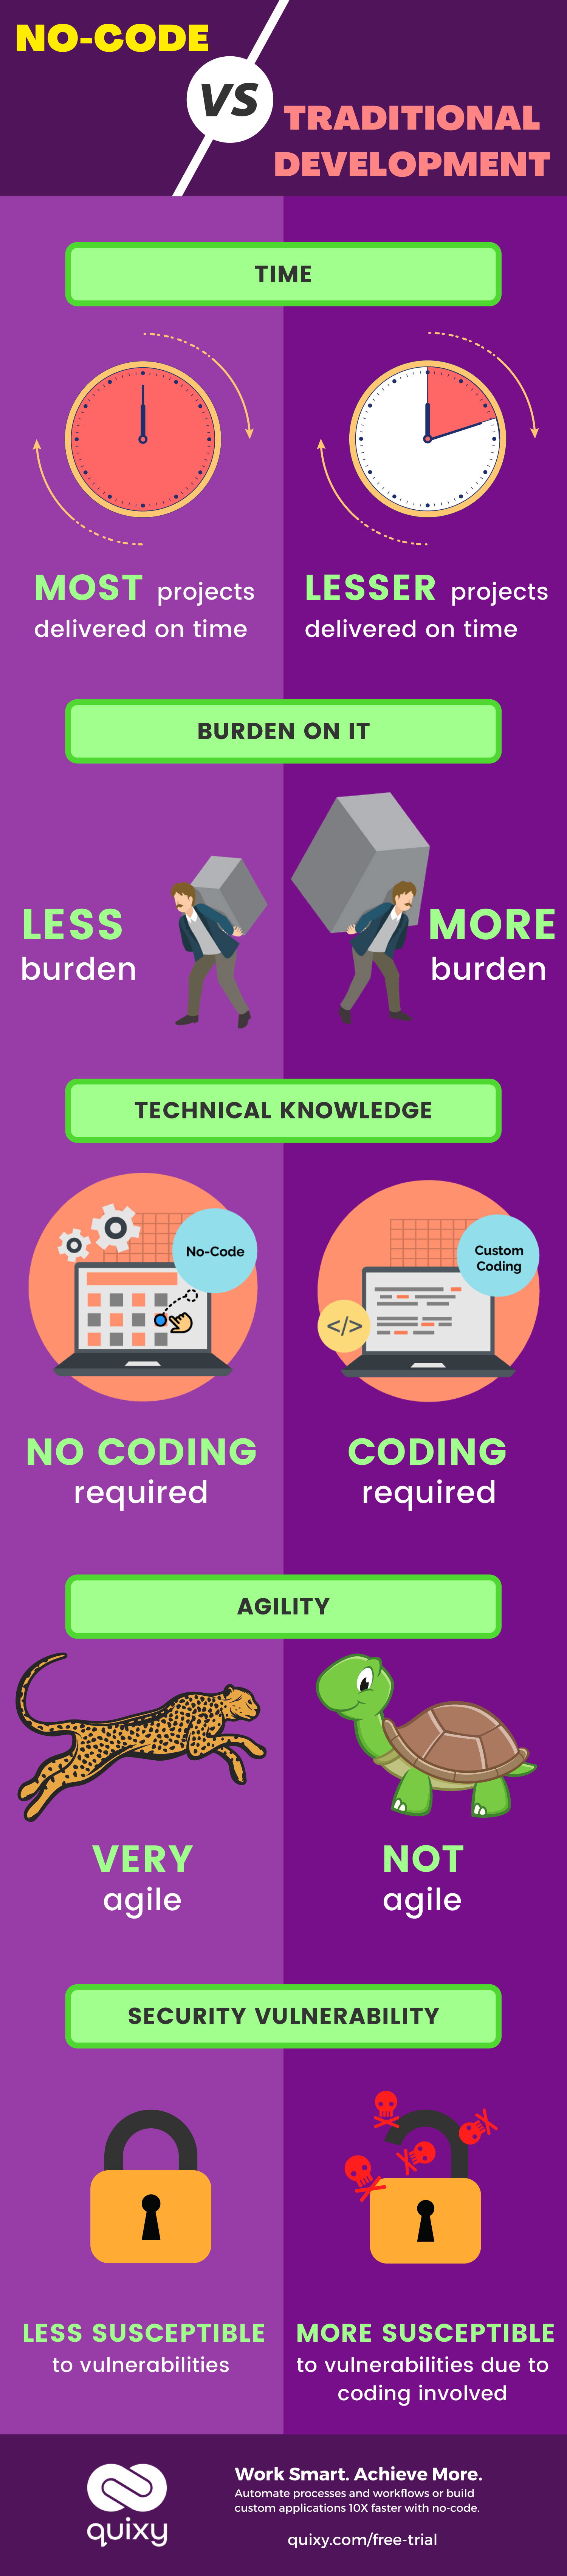 No-Code vs Traditional Development Infographic